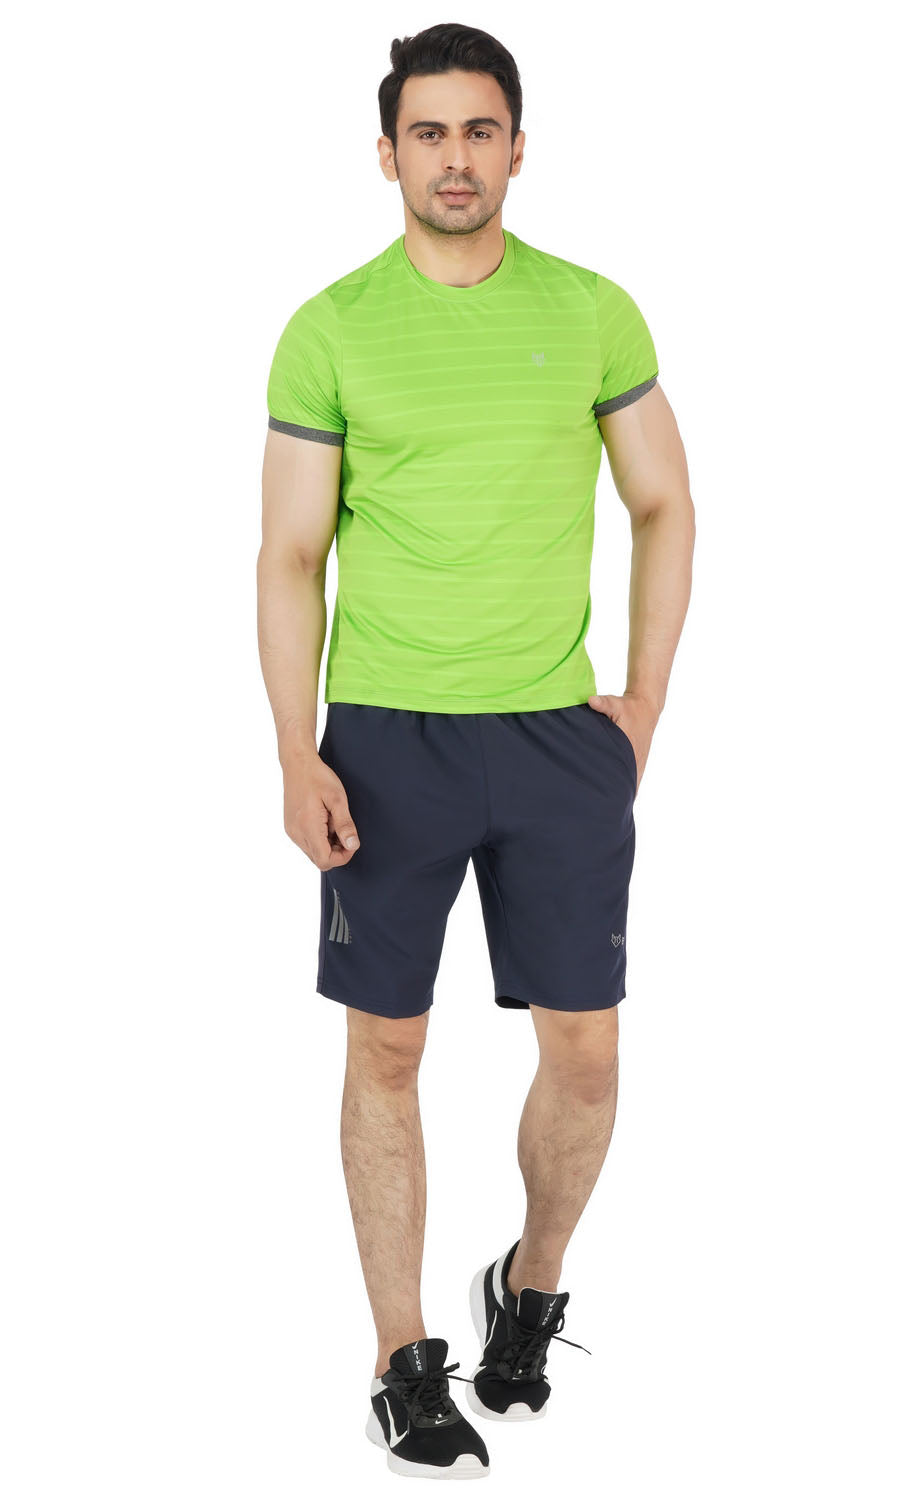  Men's Sport T-Shirt - Body Mechanics Activewear